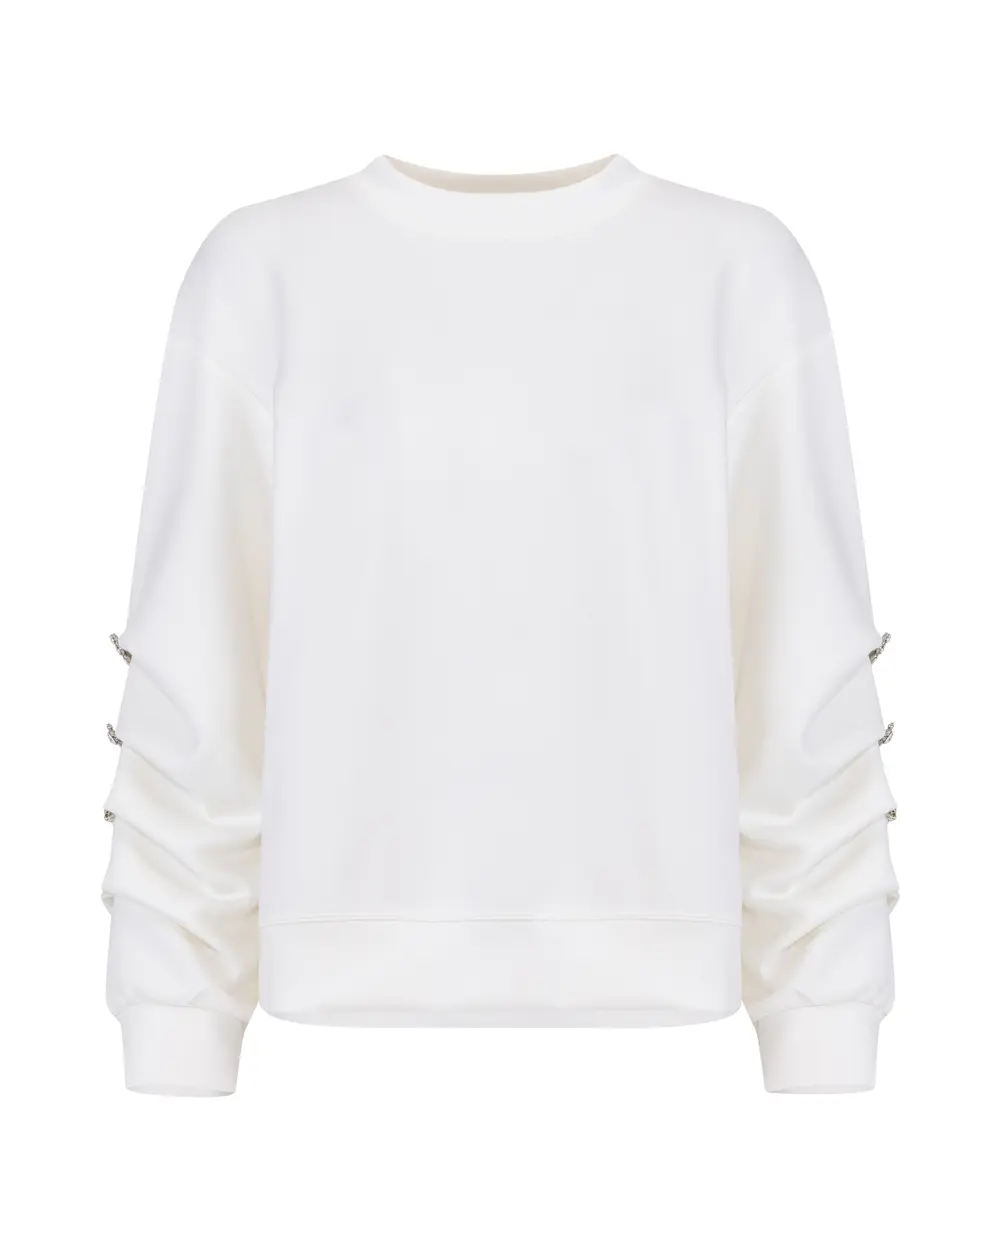 Round Neck Waist Length Sweatshirt with Sleeve Detail